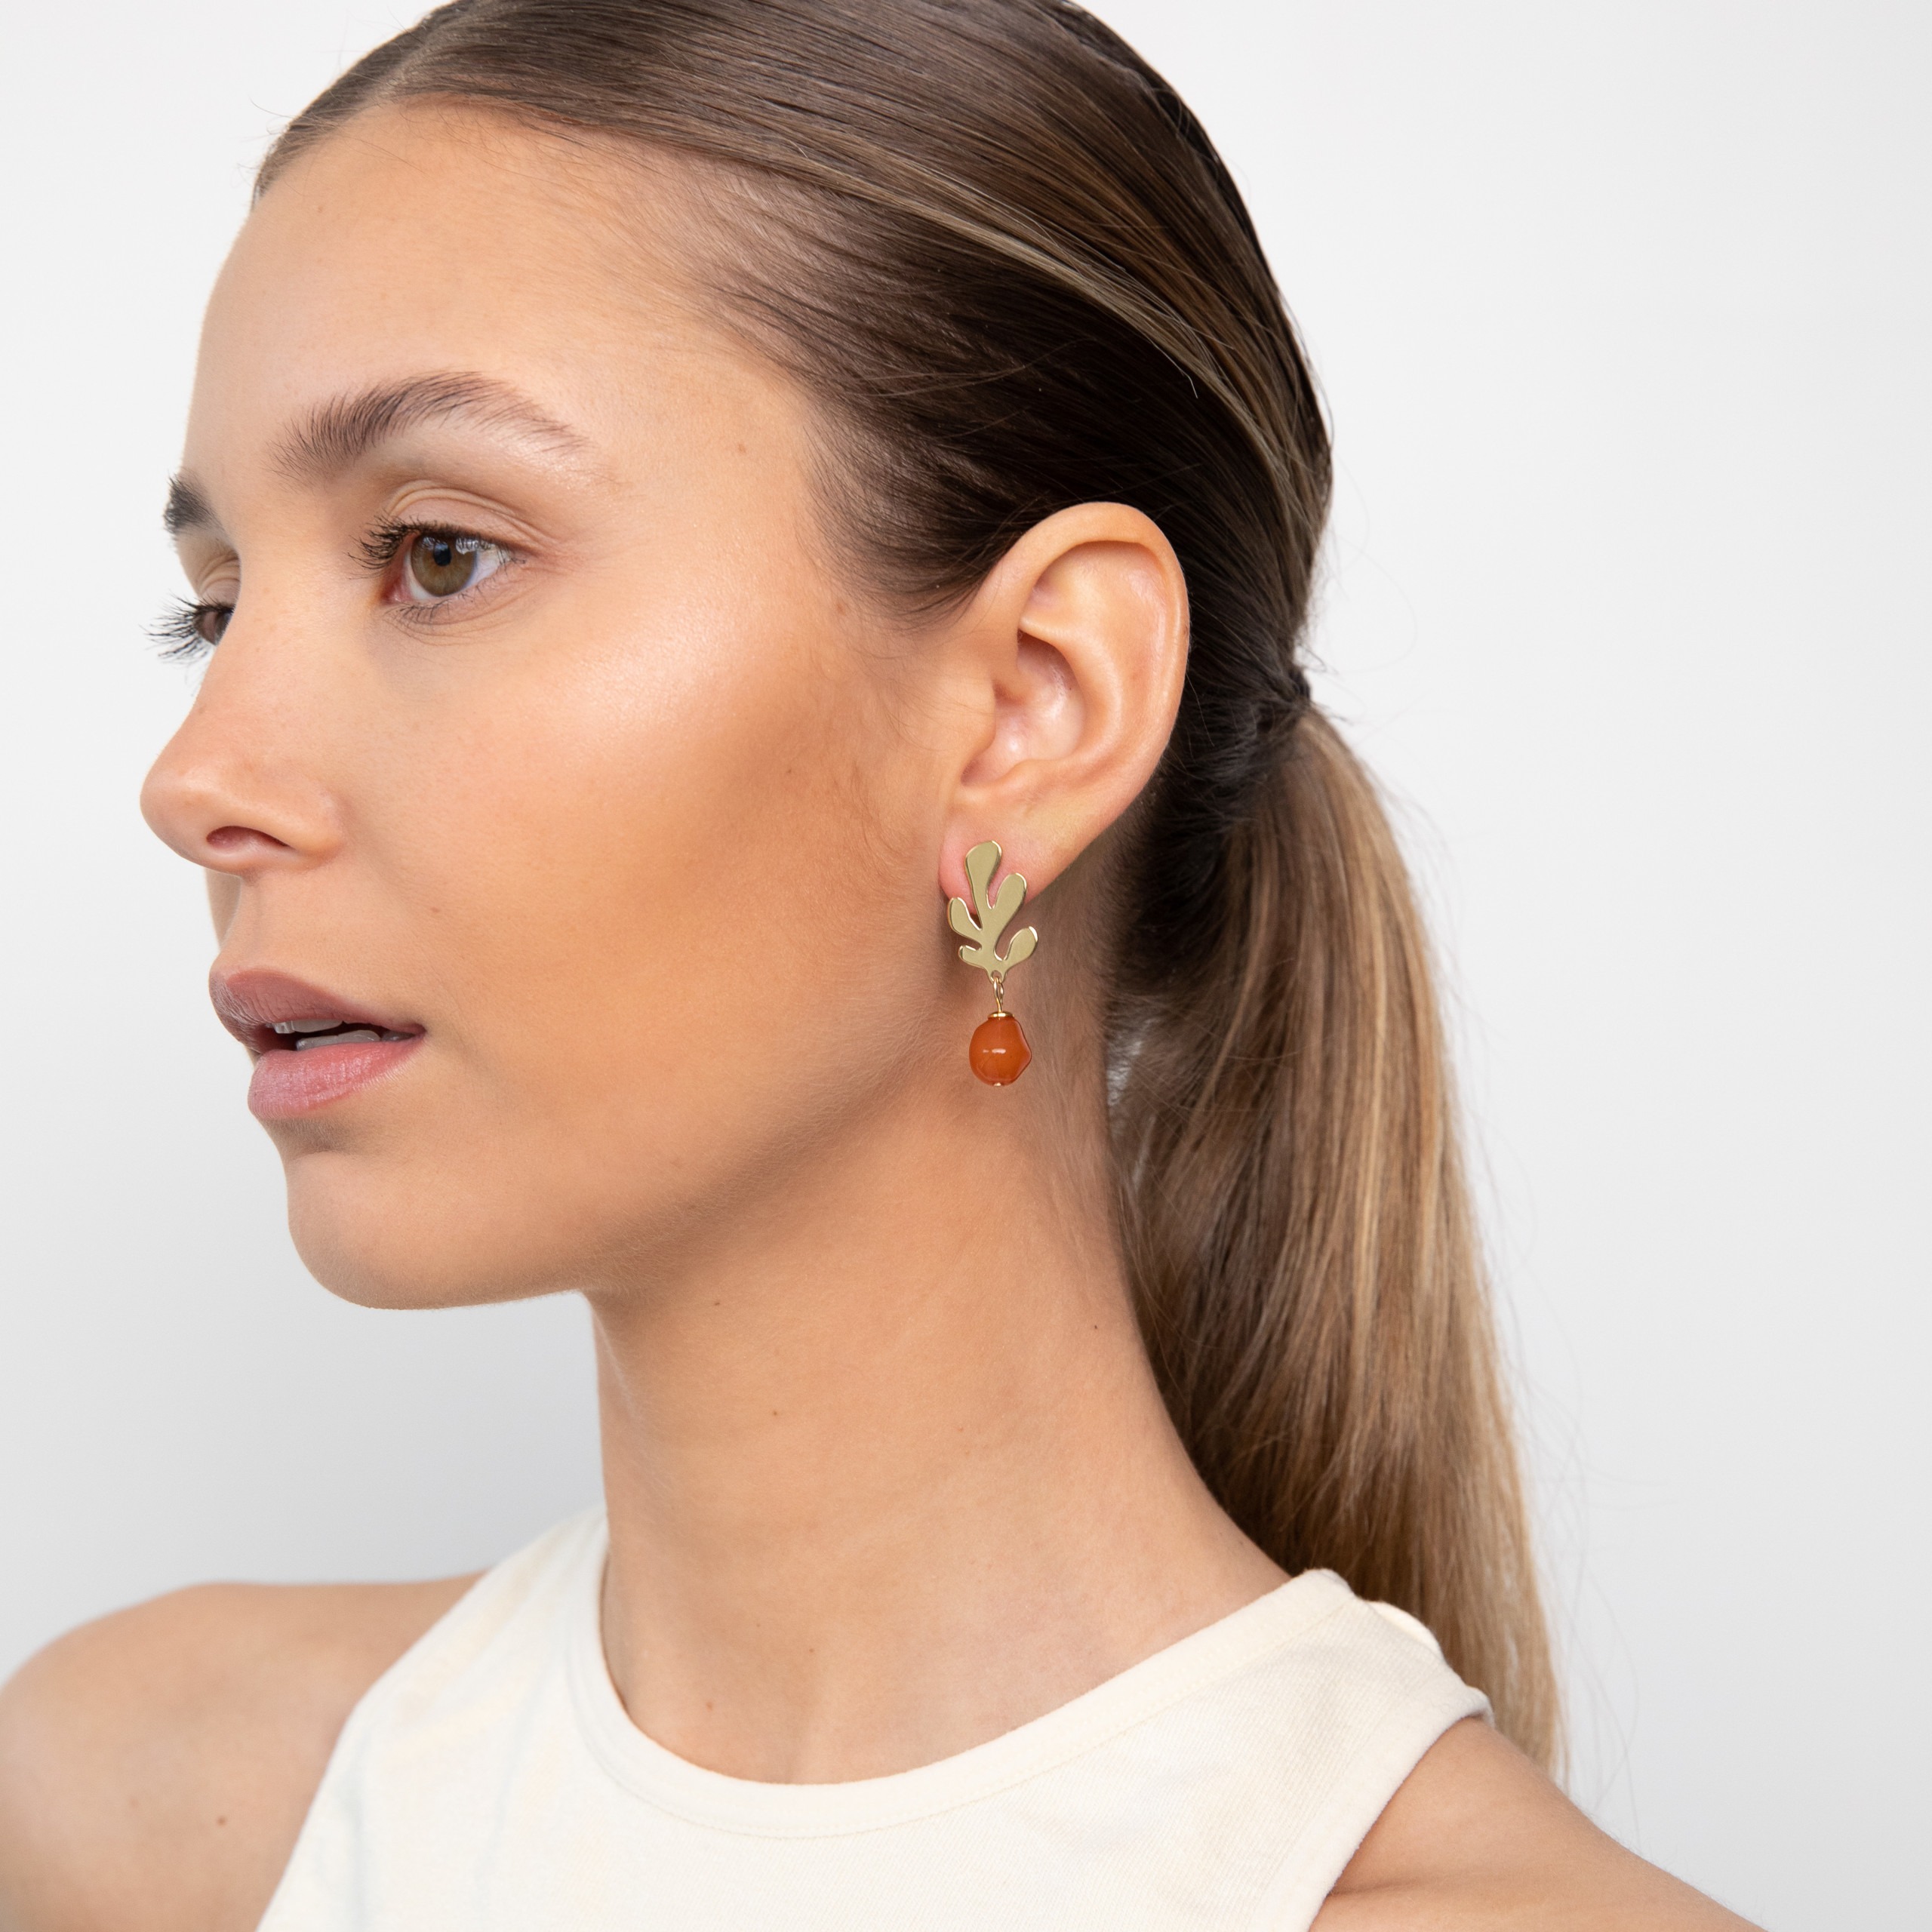 Coral mini terracota earrings